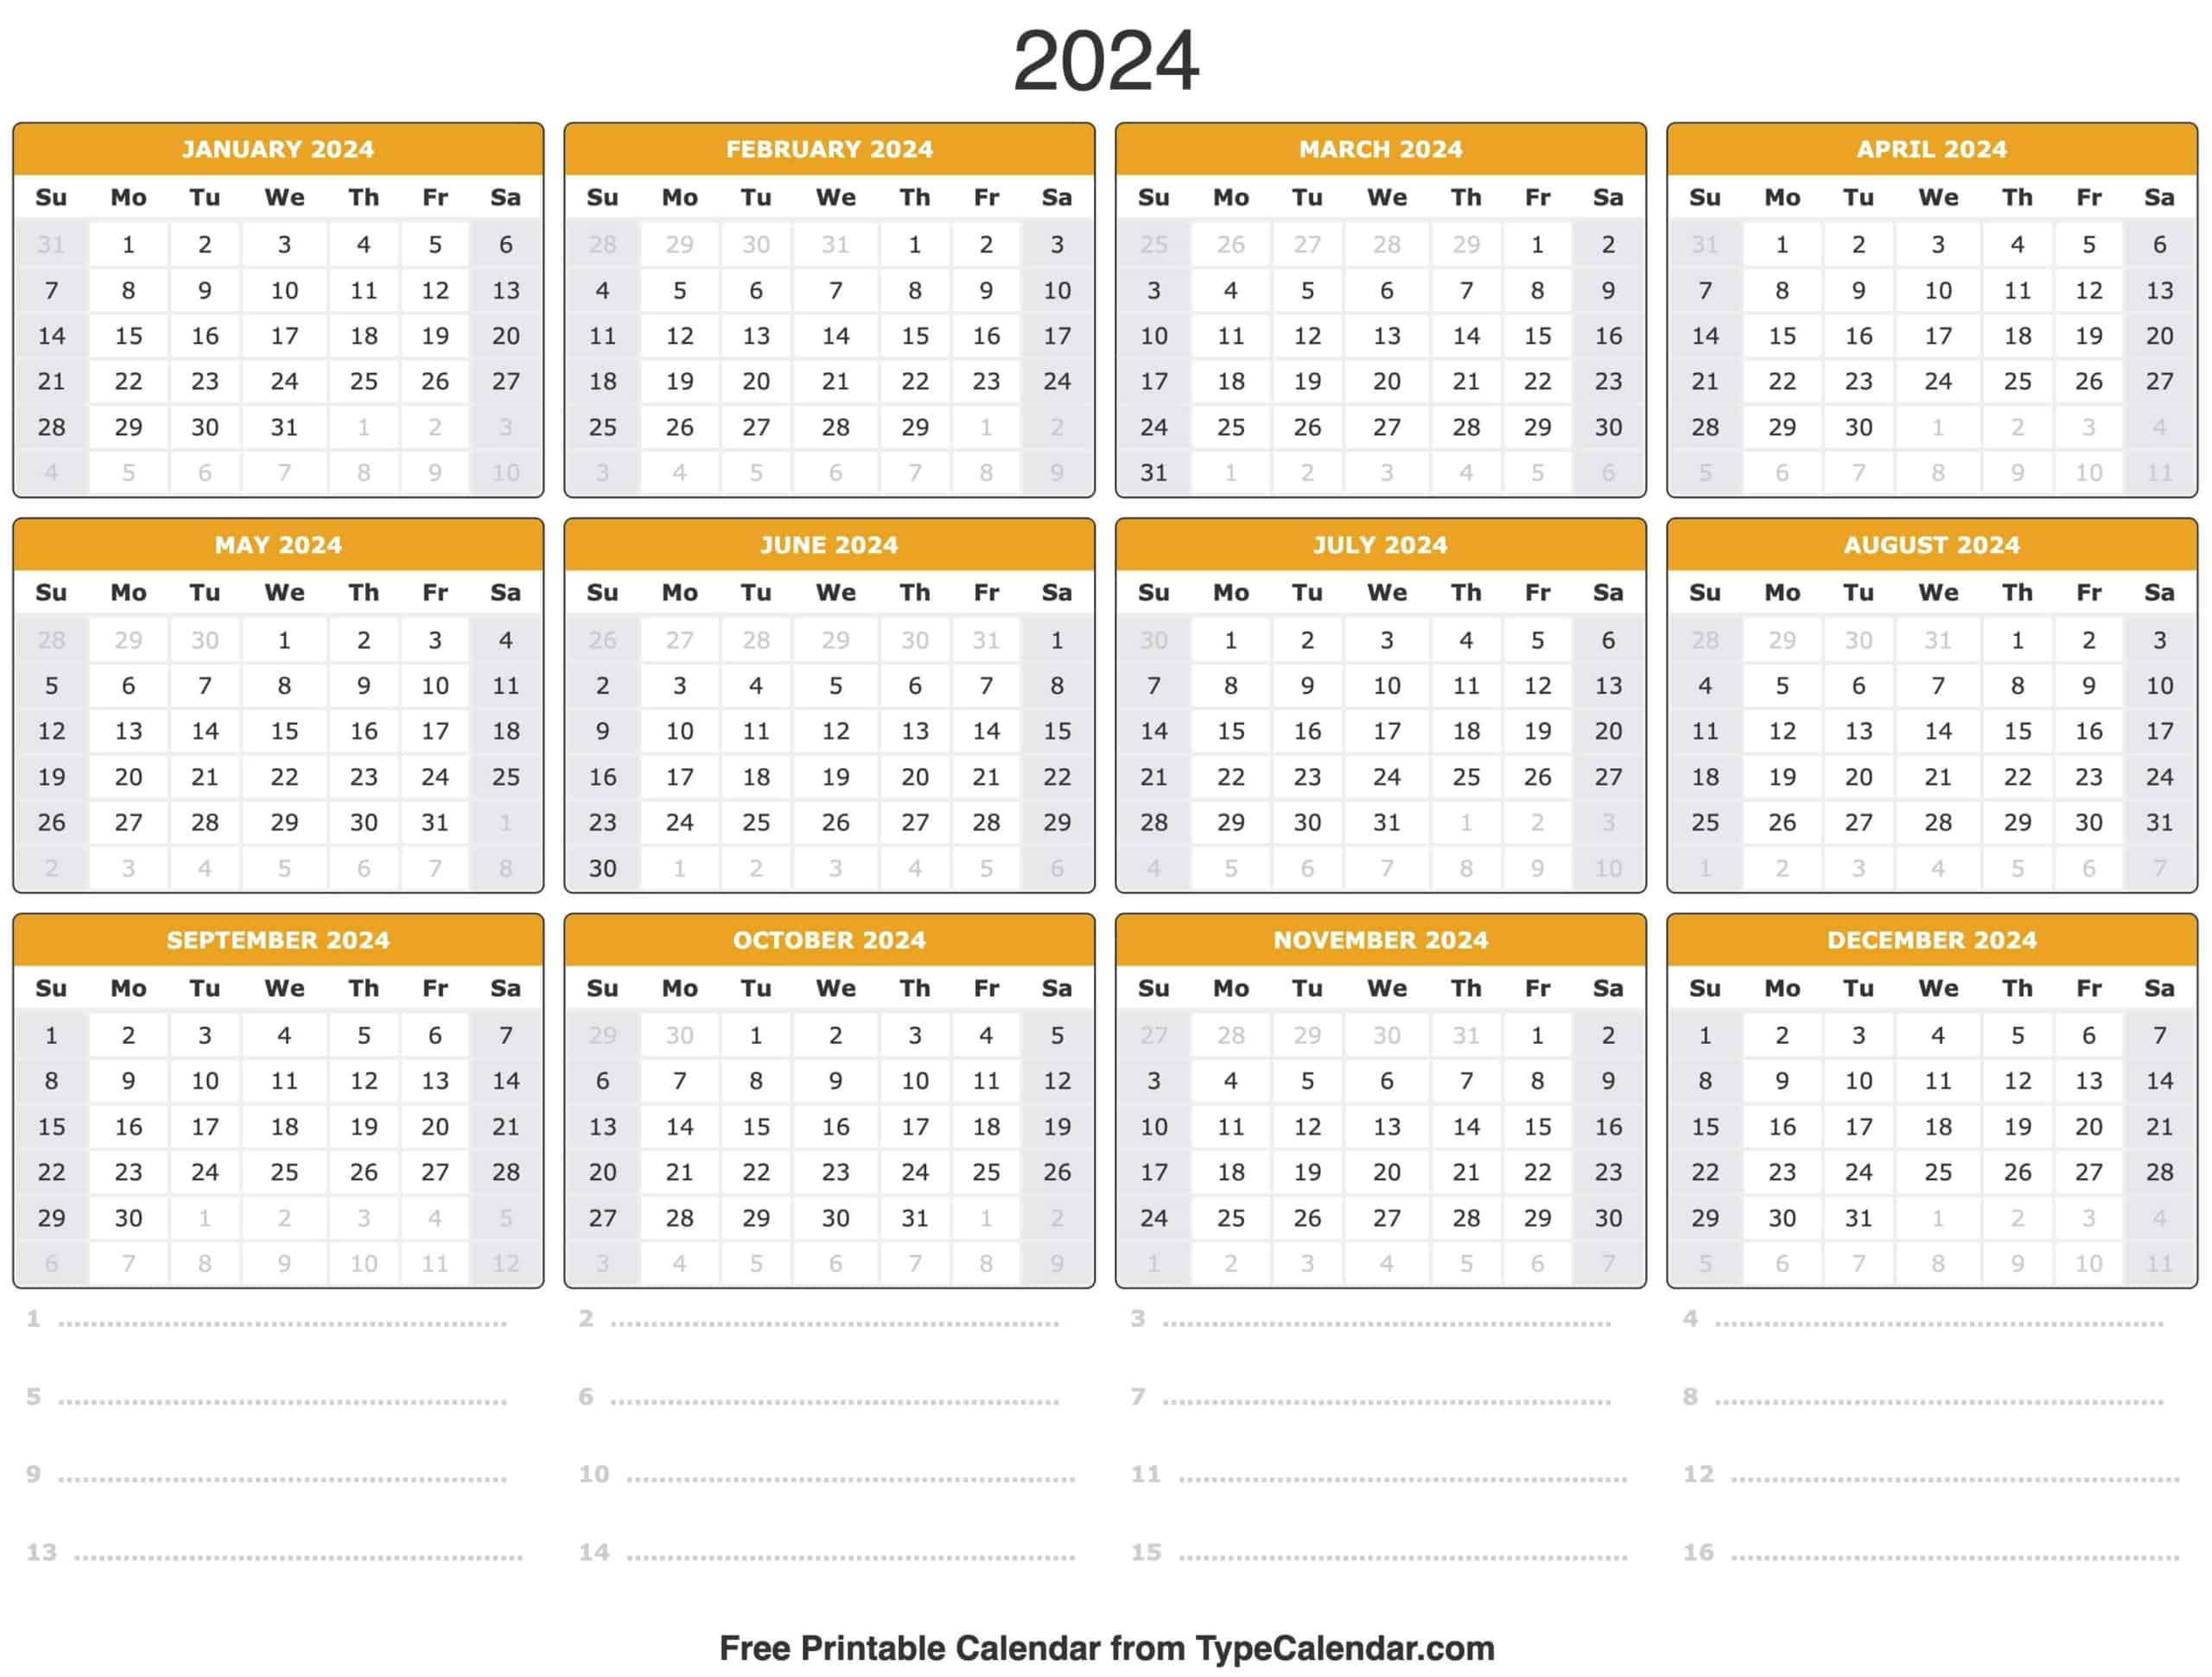 2024 Calendar: Free Printable Calendar With Holidays | Free Blank Printable 2024 Calendars Of All Months